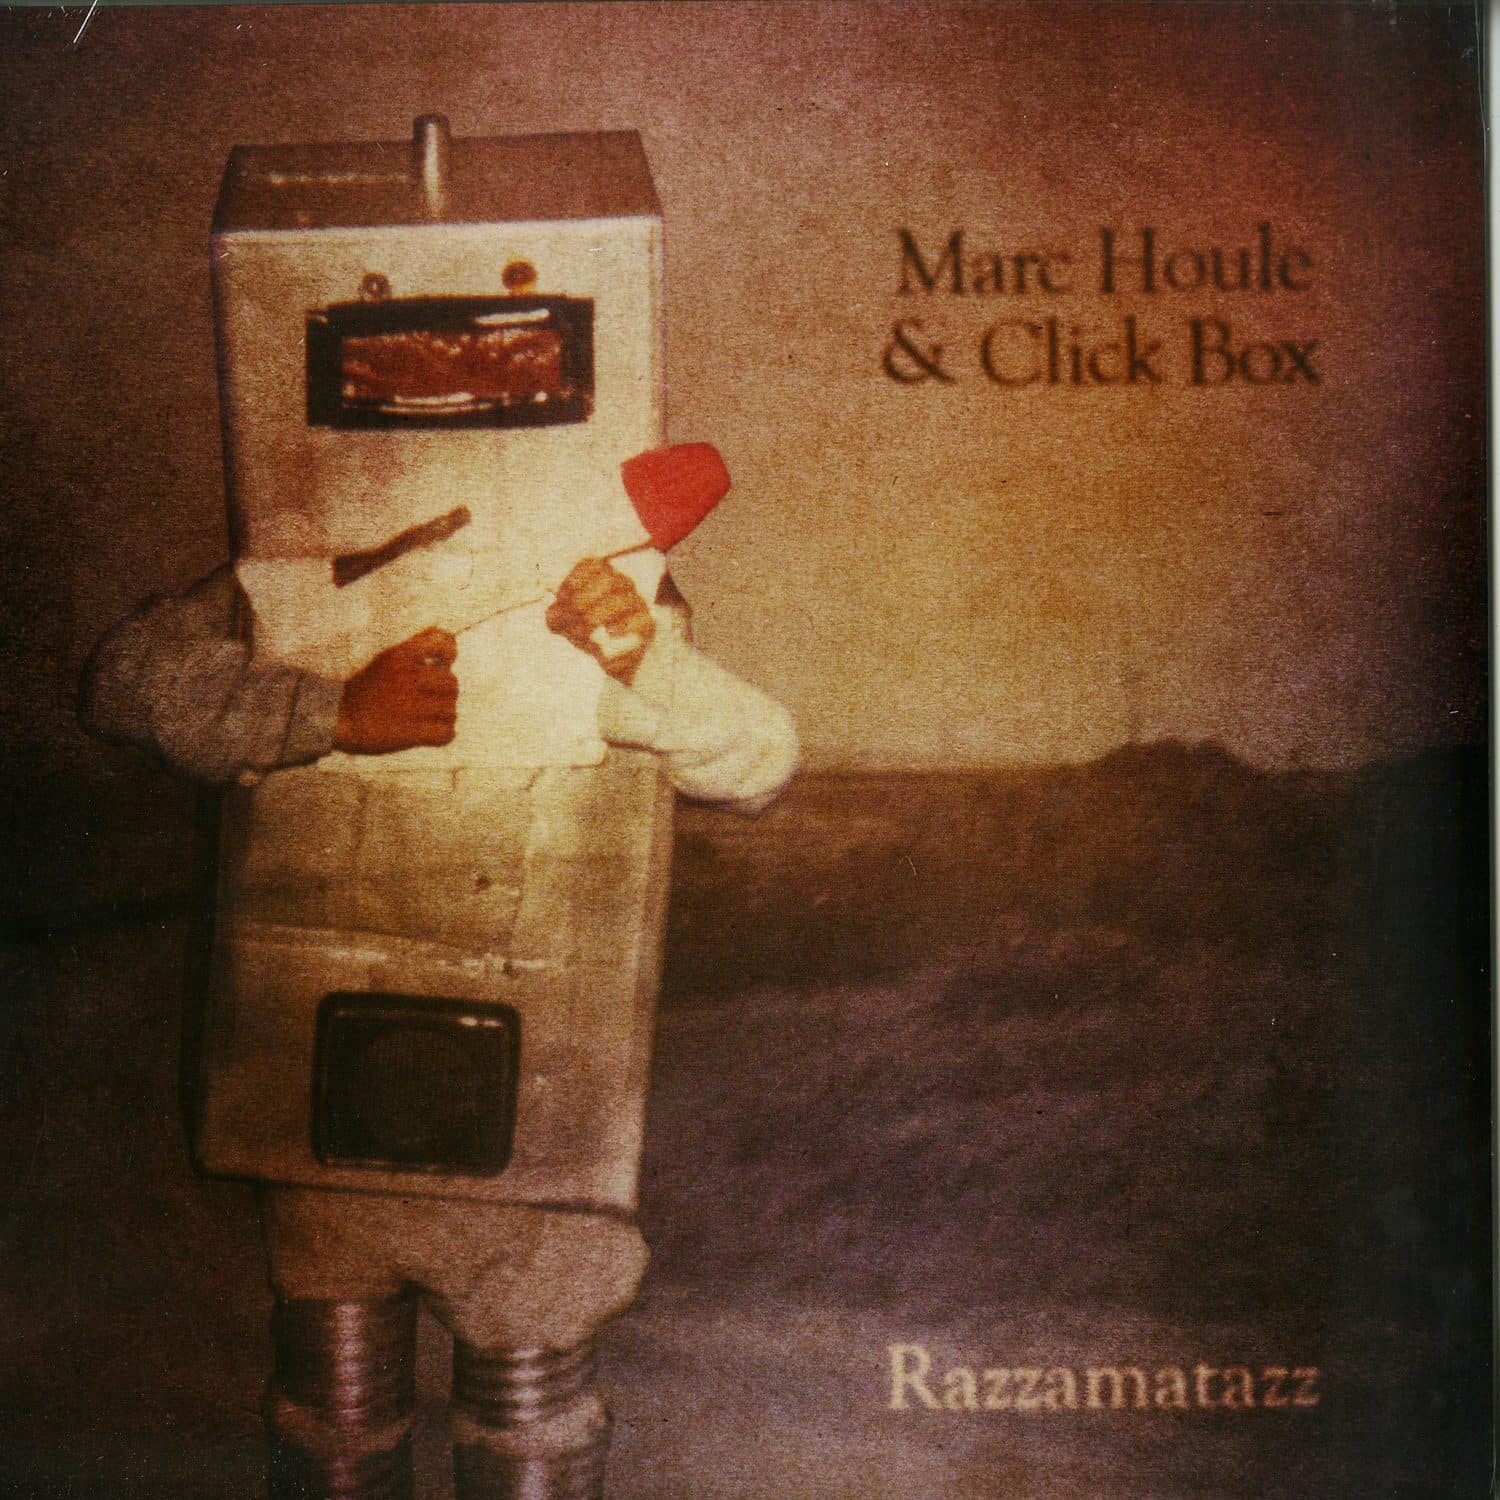 Marc Houle & Click Box - RAZZAMATAZZ